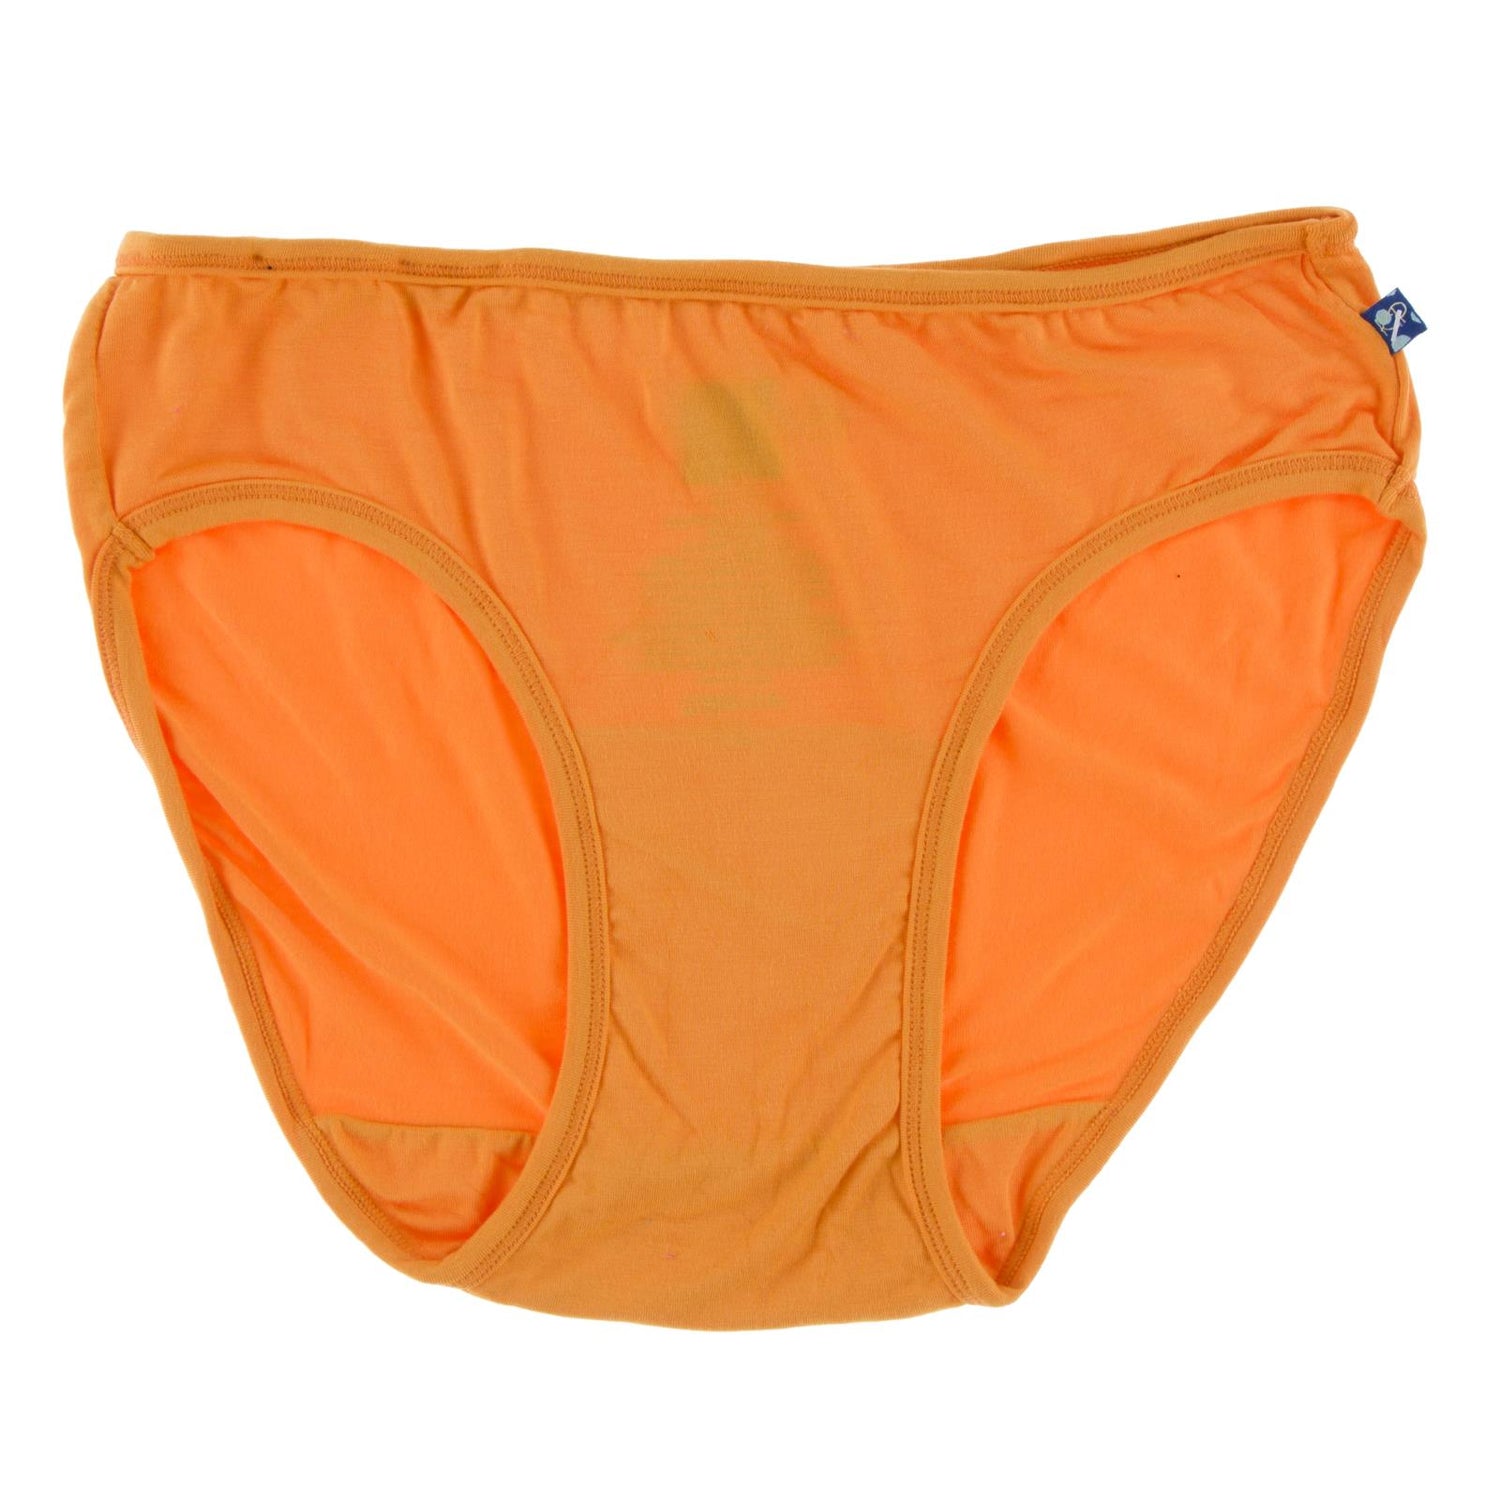 Underwear in Apricot